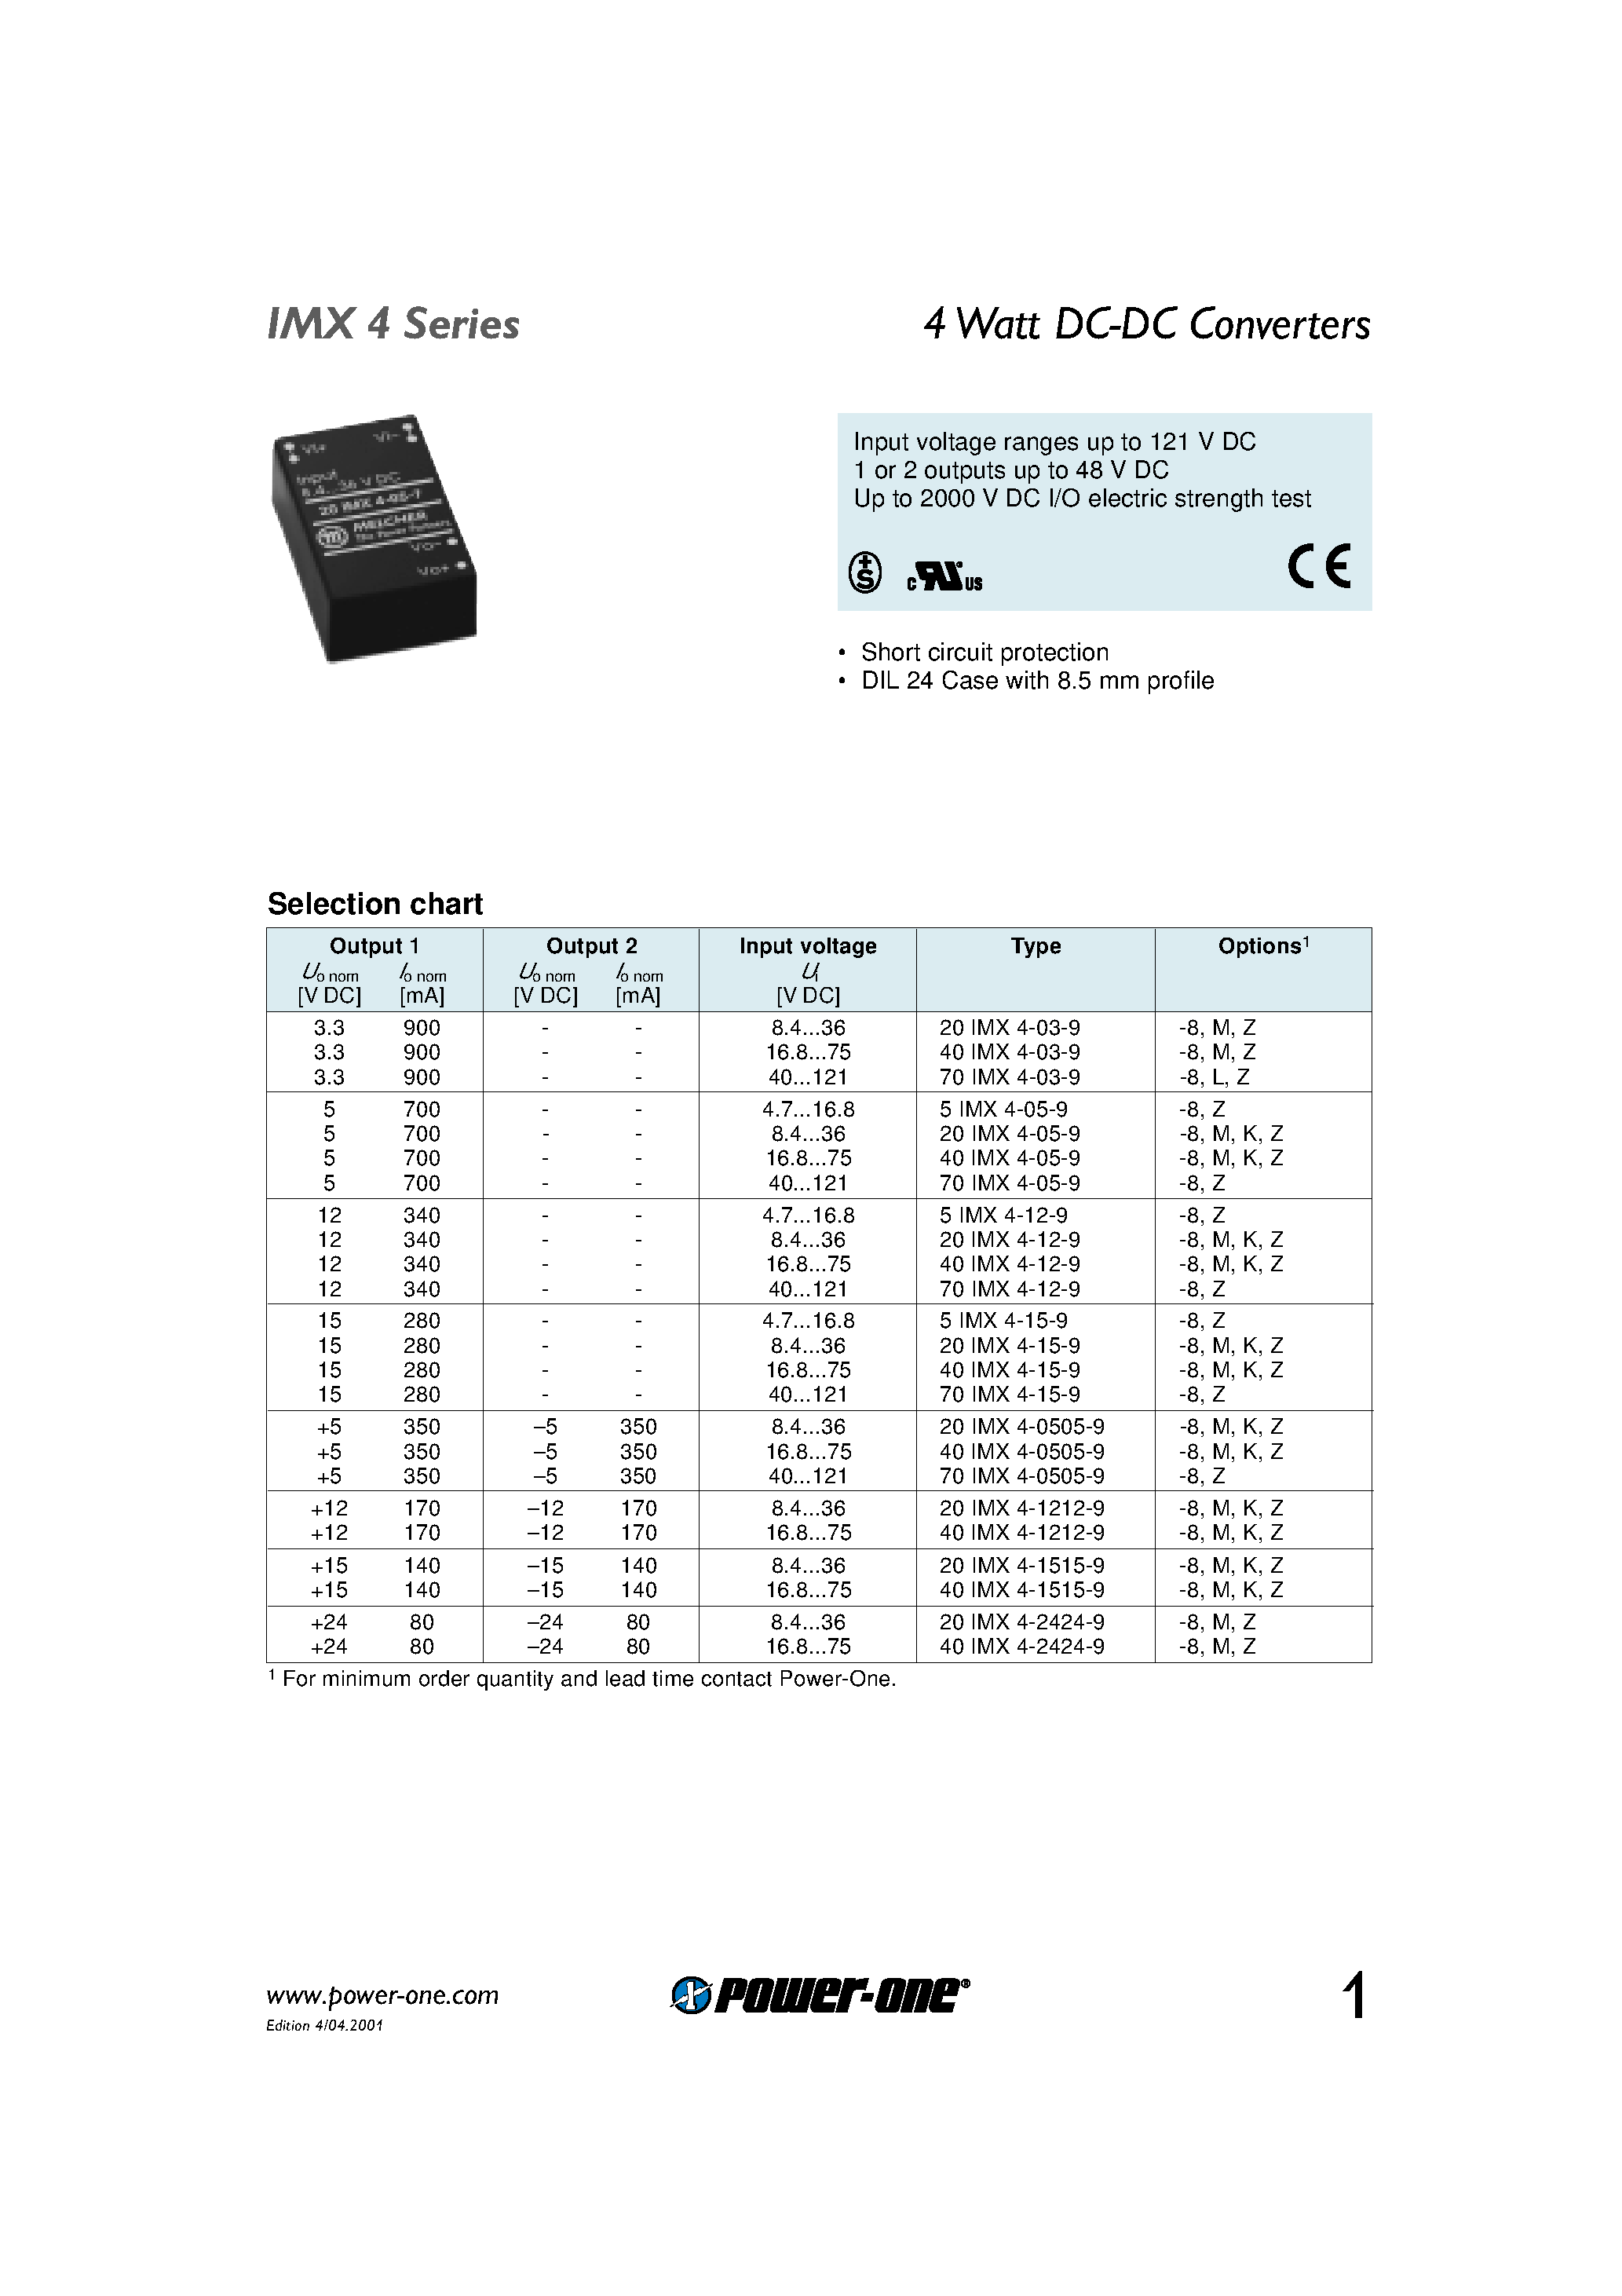 Datasheet 40IMX4-2424-9 - 4 Watt DC-DC Converters page 1